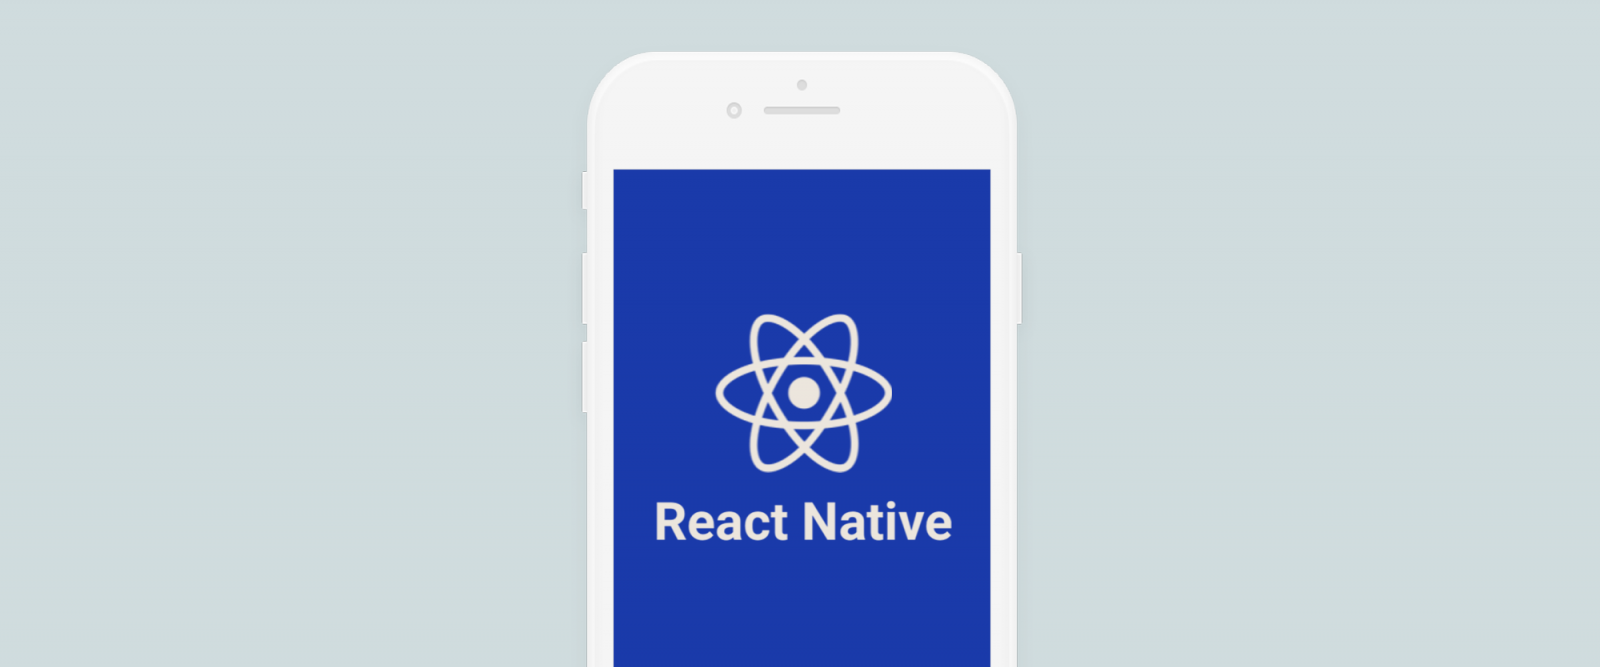 React Native mobiilisovelluksen teknologiaksi